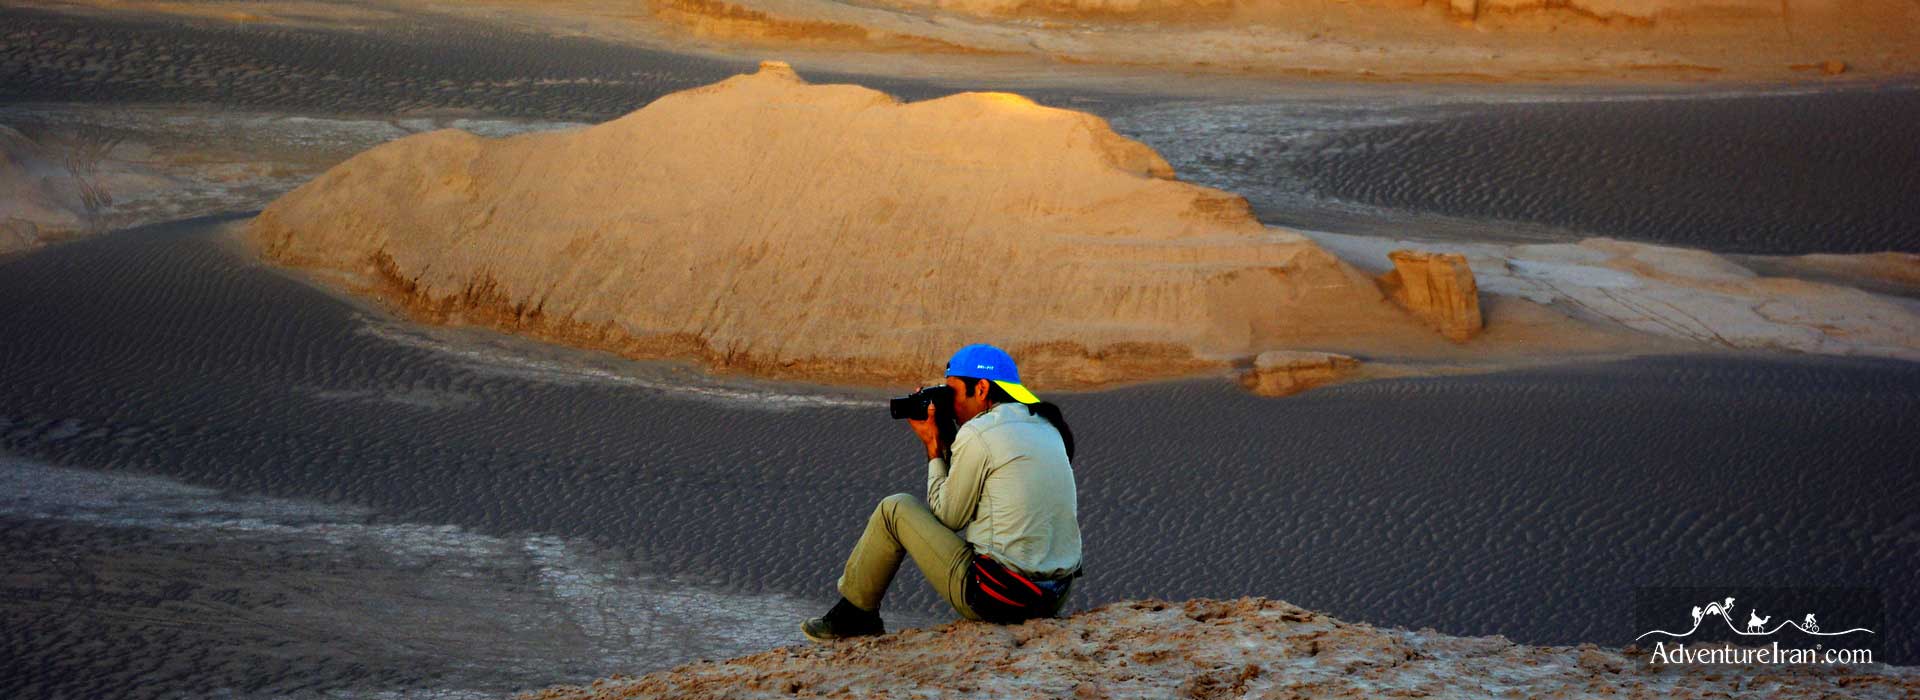 Photography Lut Desert